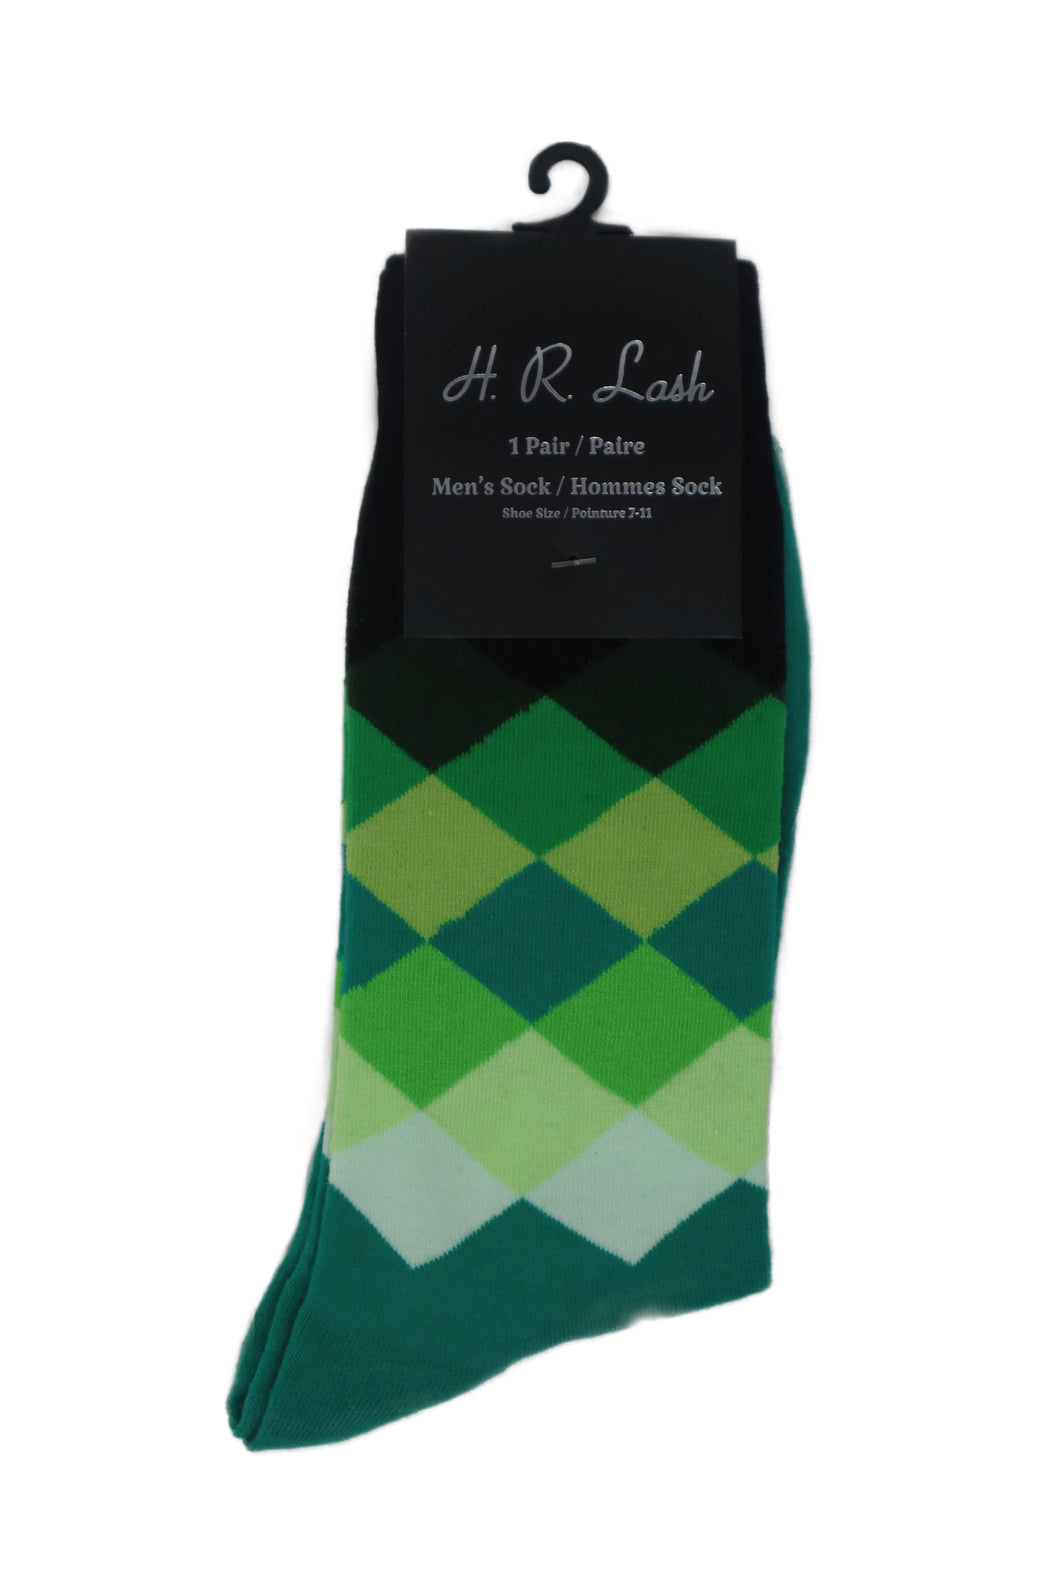 H. R. Lash | FS142 | Fun Socks | Green Argyle